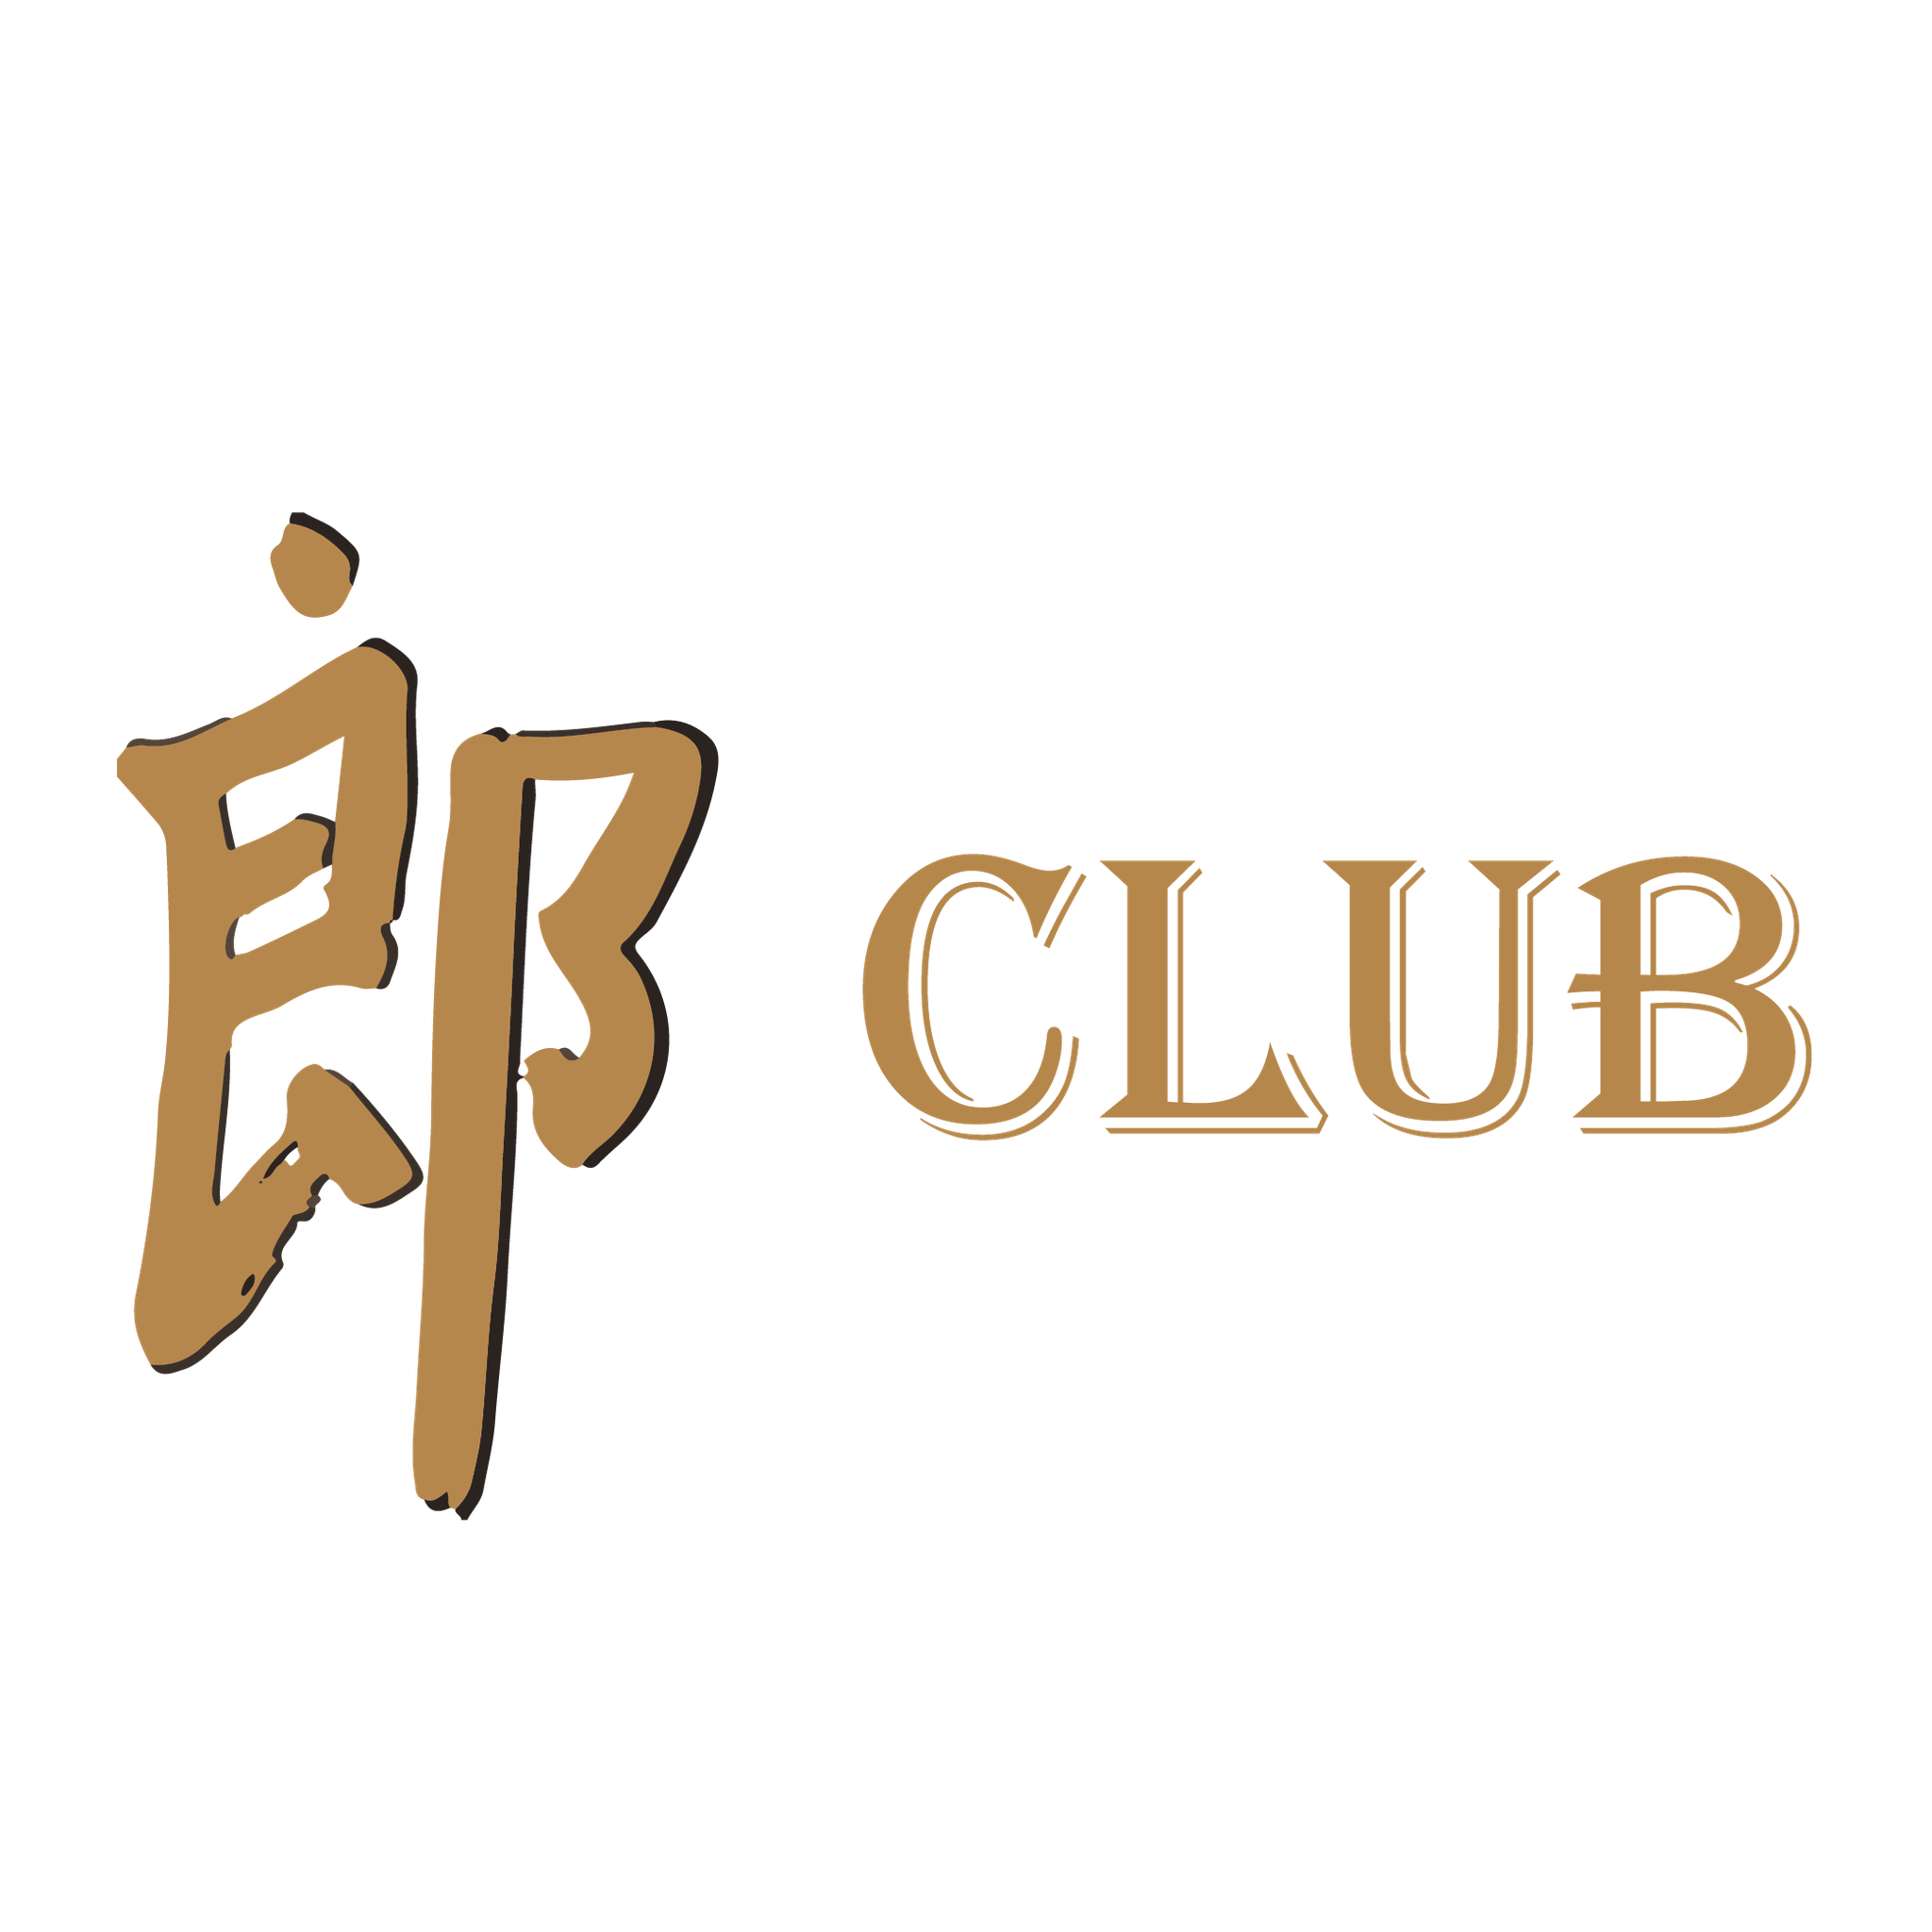  Lang club